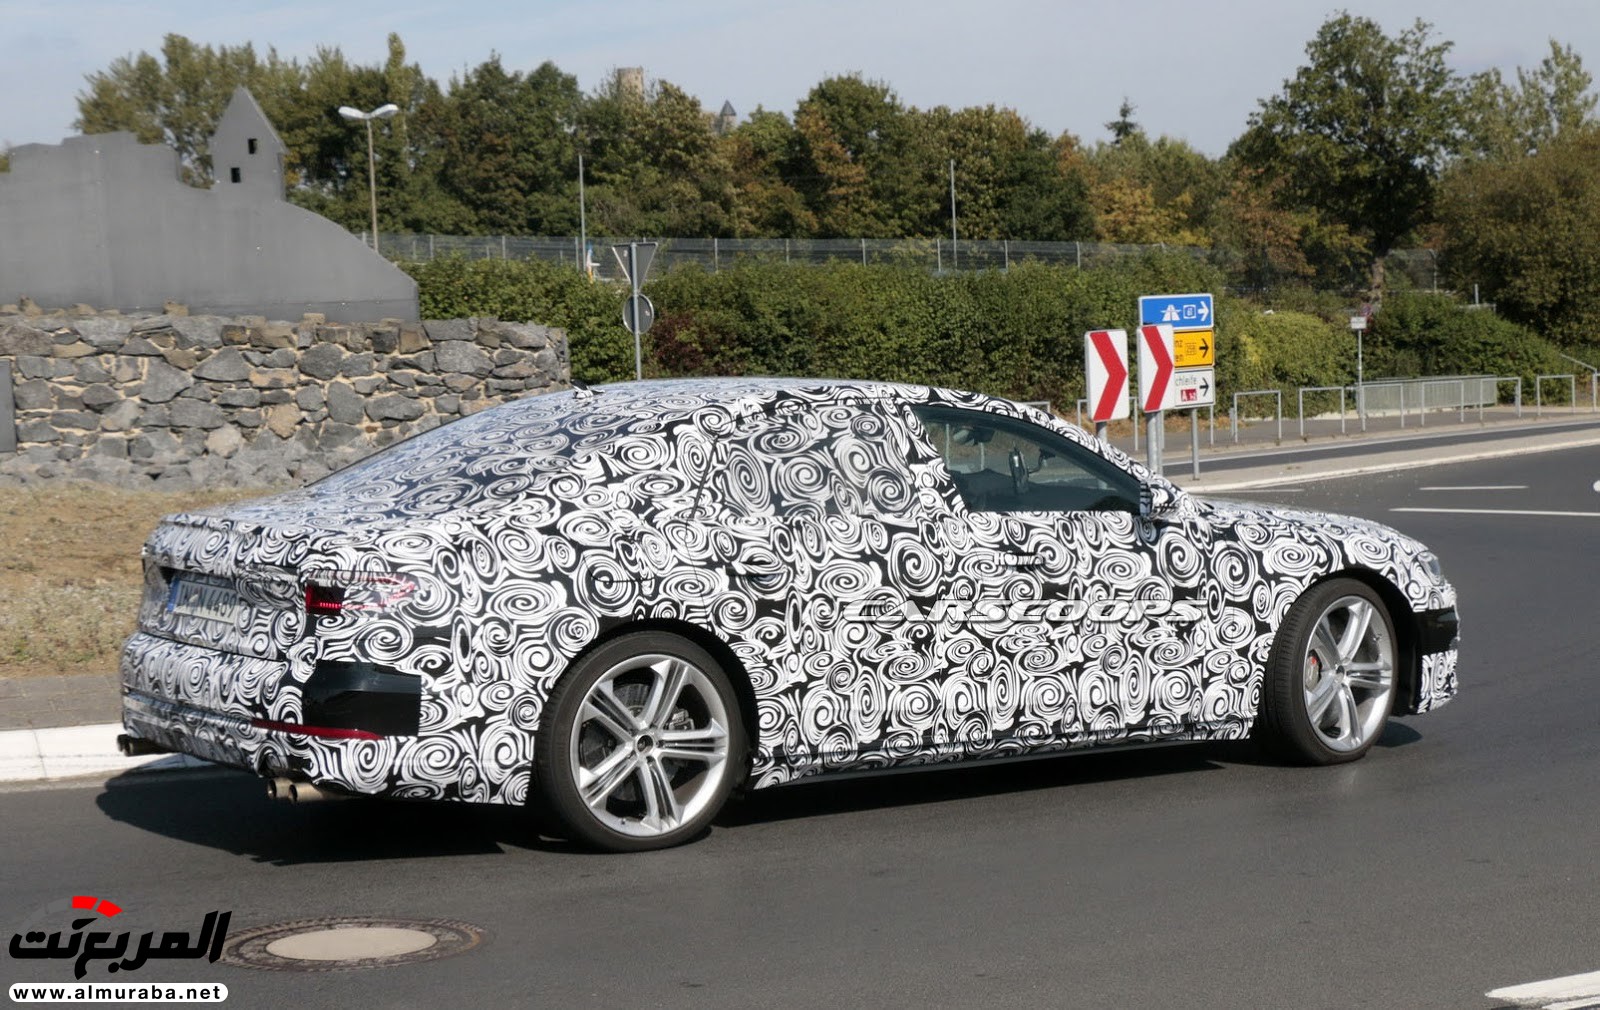 اودي A8 2018 الجديدة كلياً تظهر خلال اختبارها وقبل تدشينها رسمياً "صور وفيديو" Audi A8 18